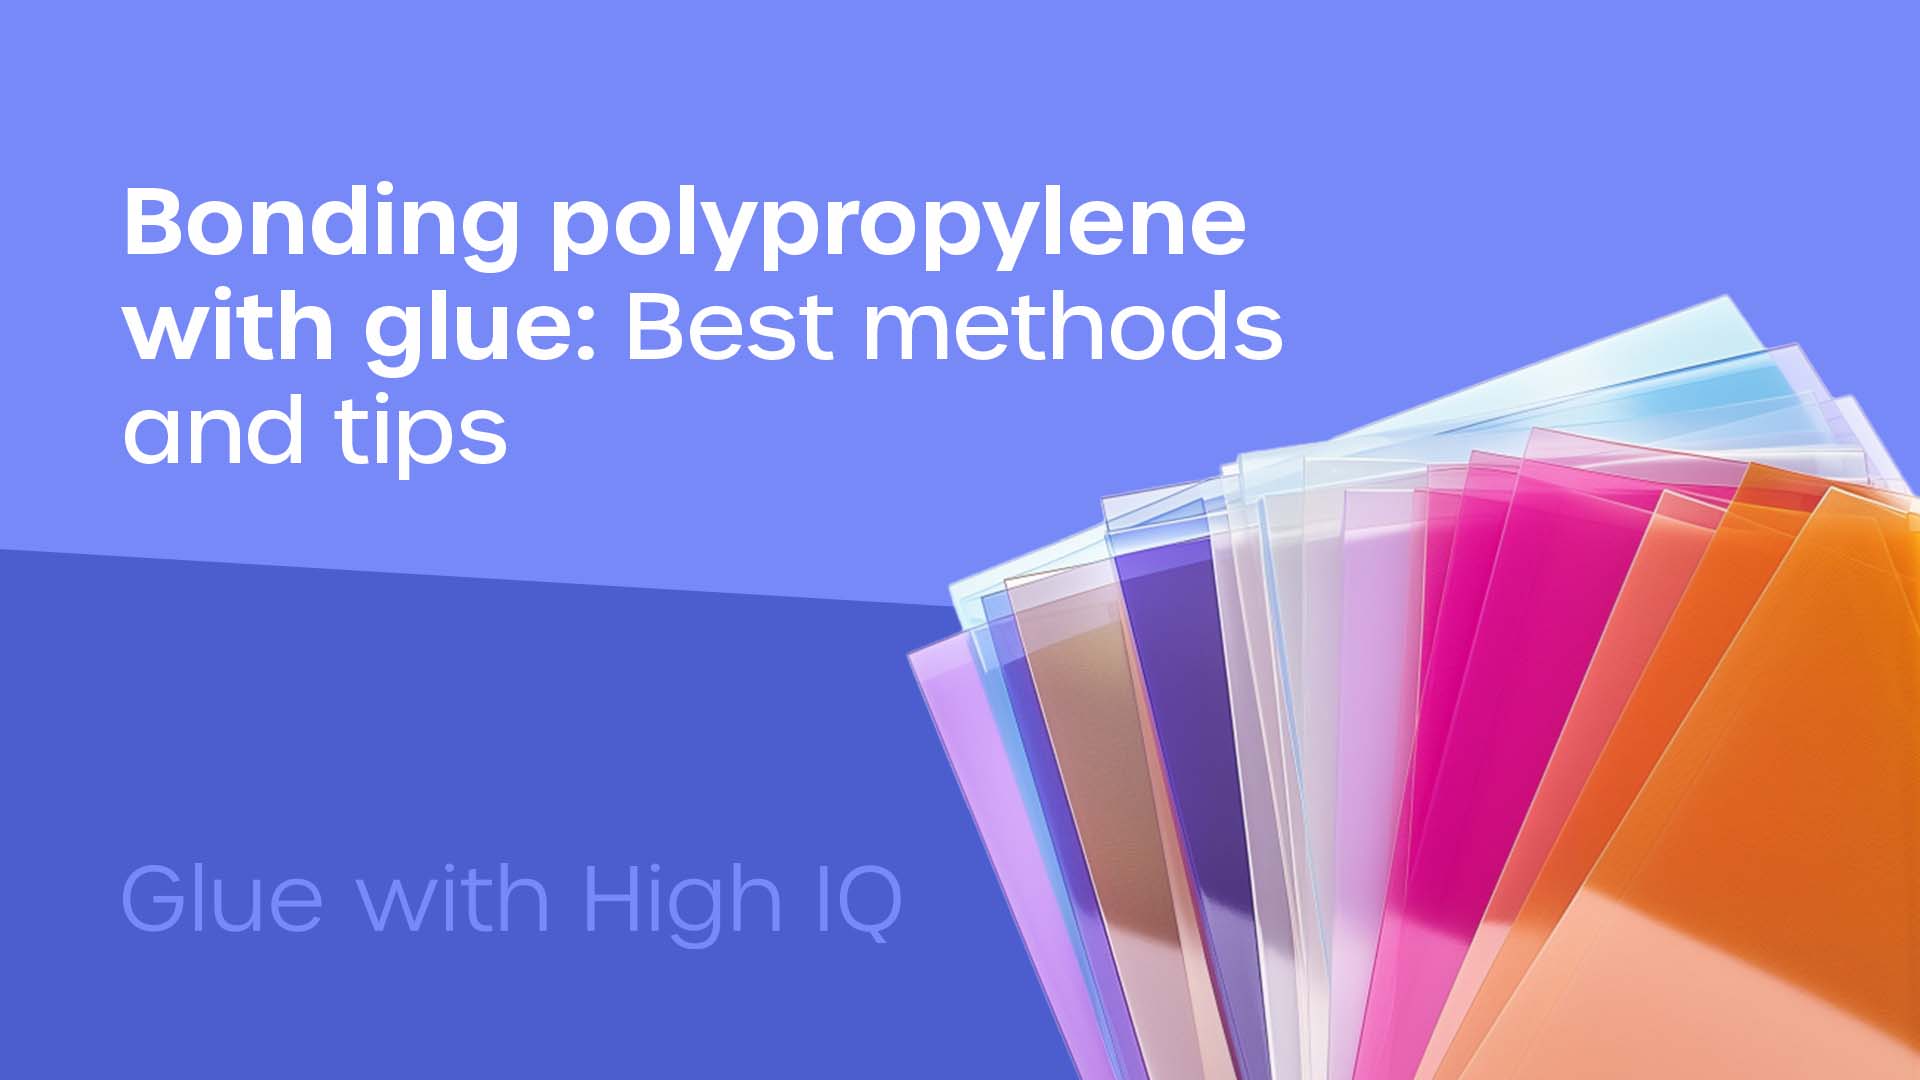 How to bond polypropylene with glue